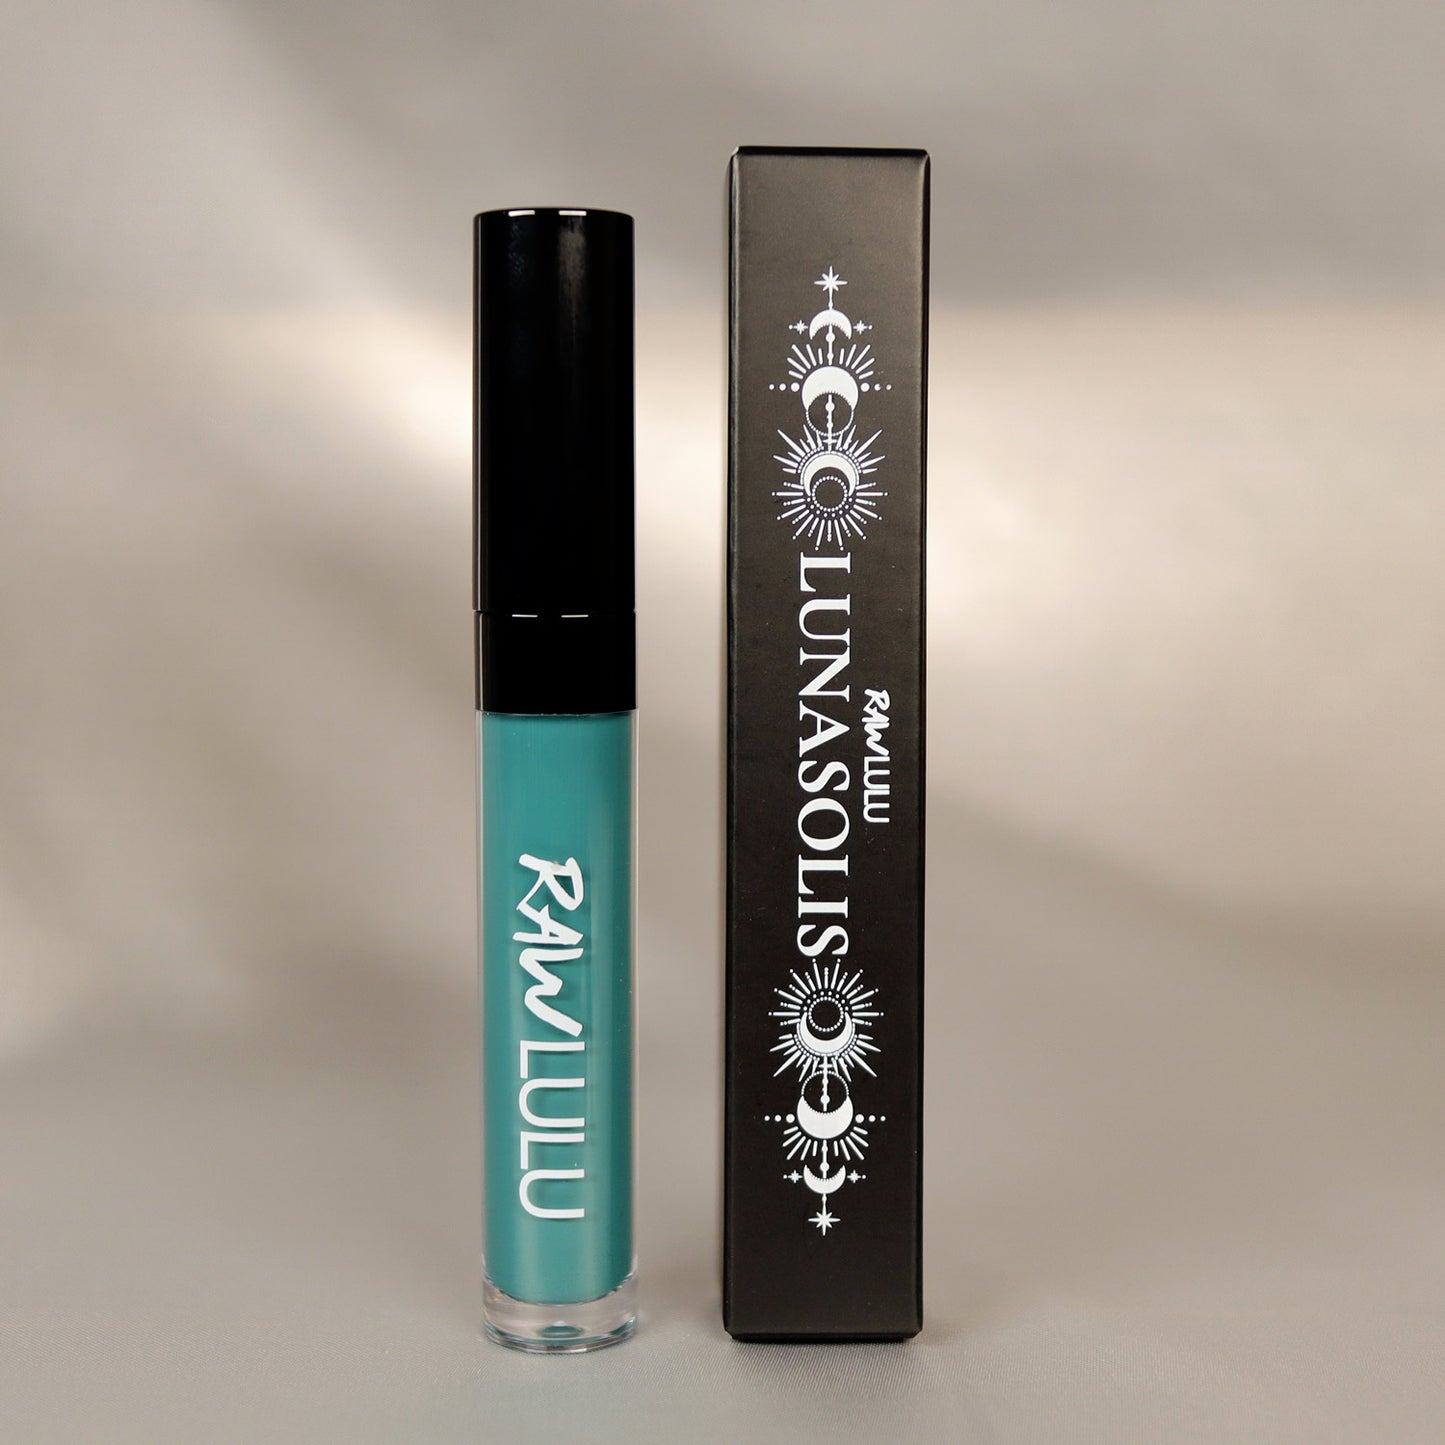 Kali Creamy Matte Lipstick